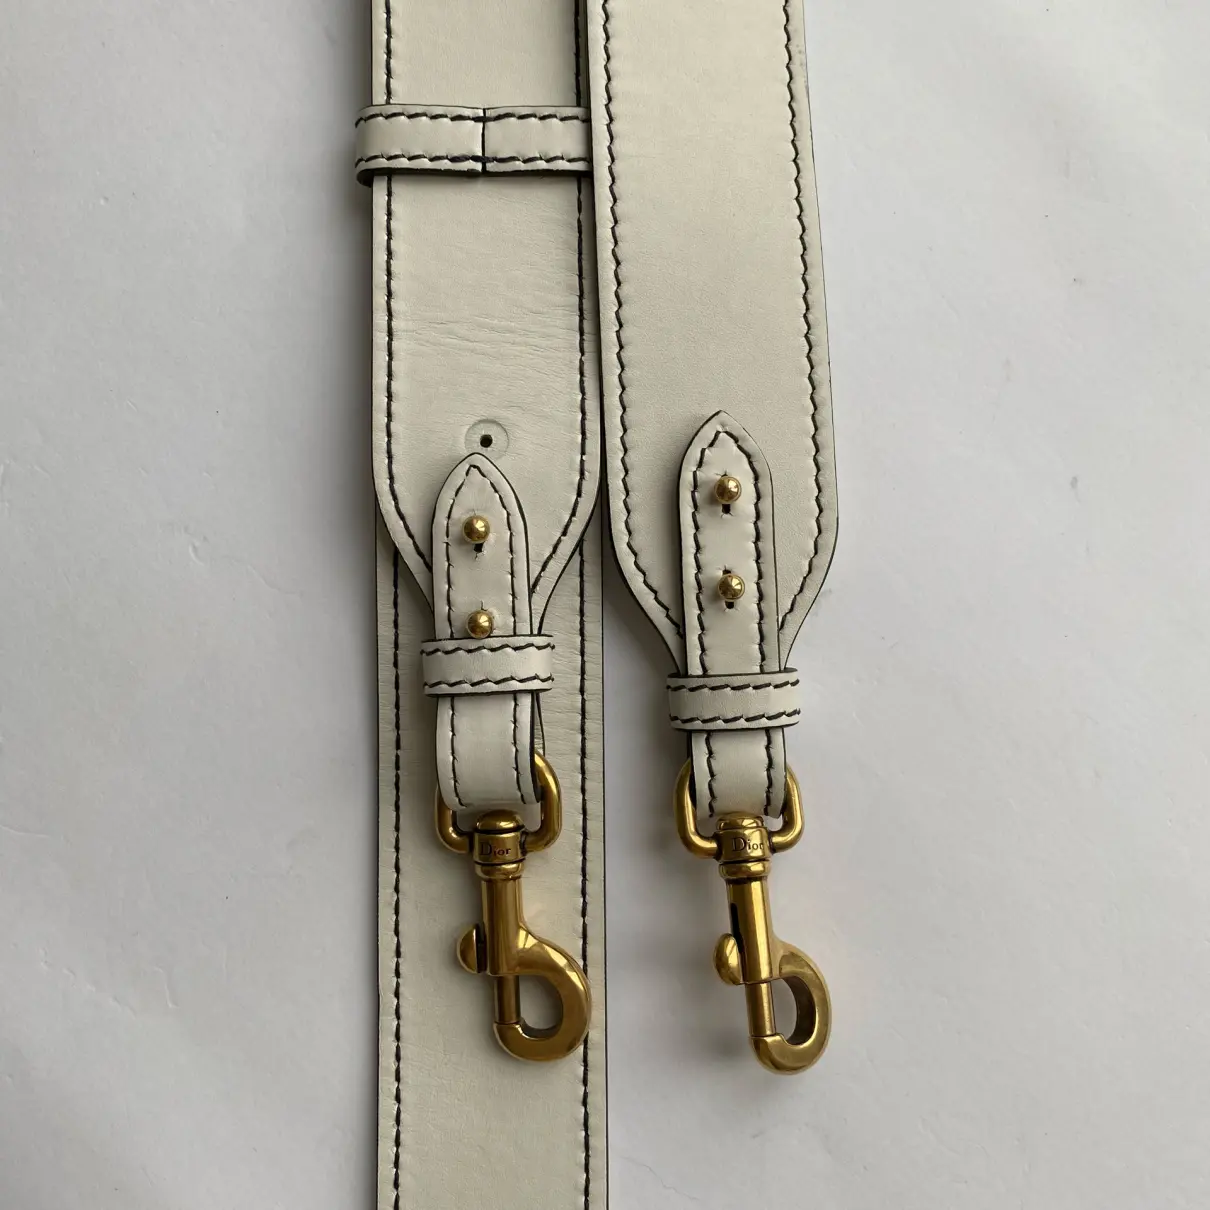 D-Fence leather handbag Dior